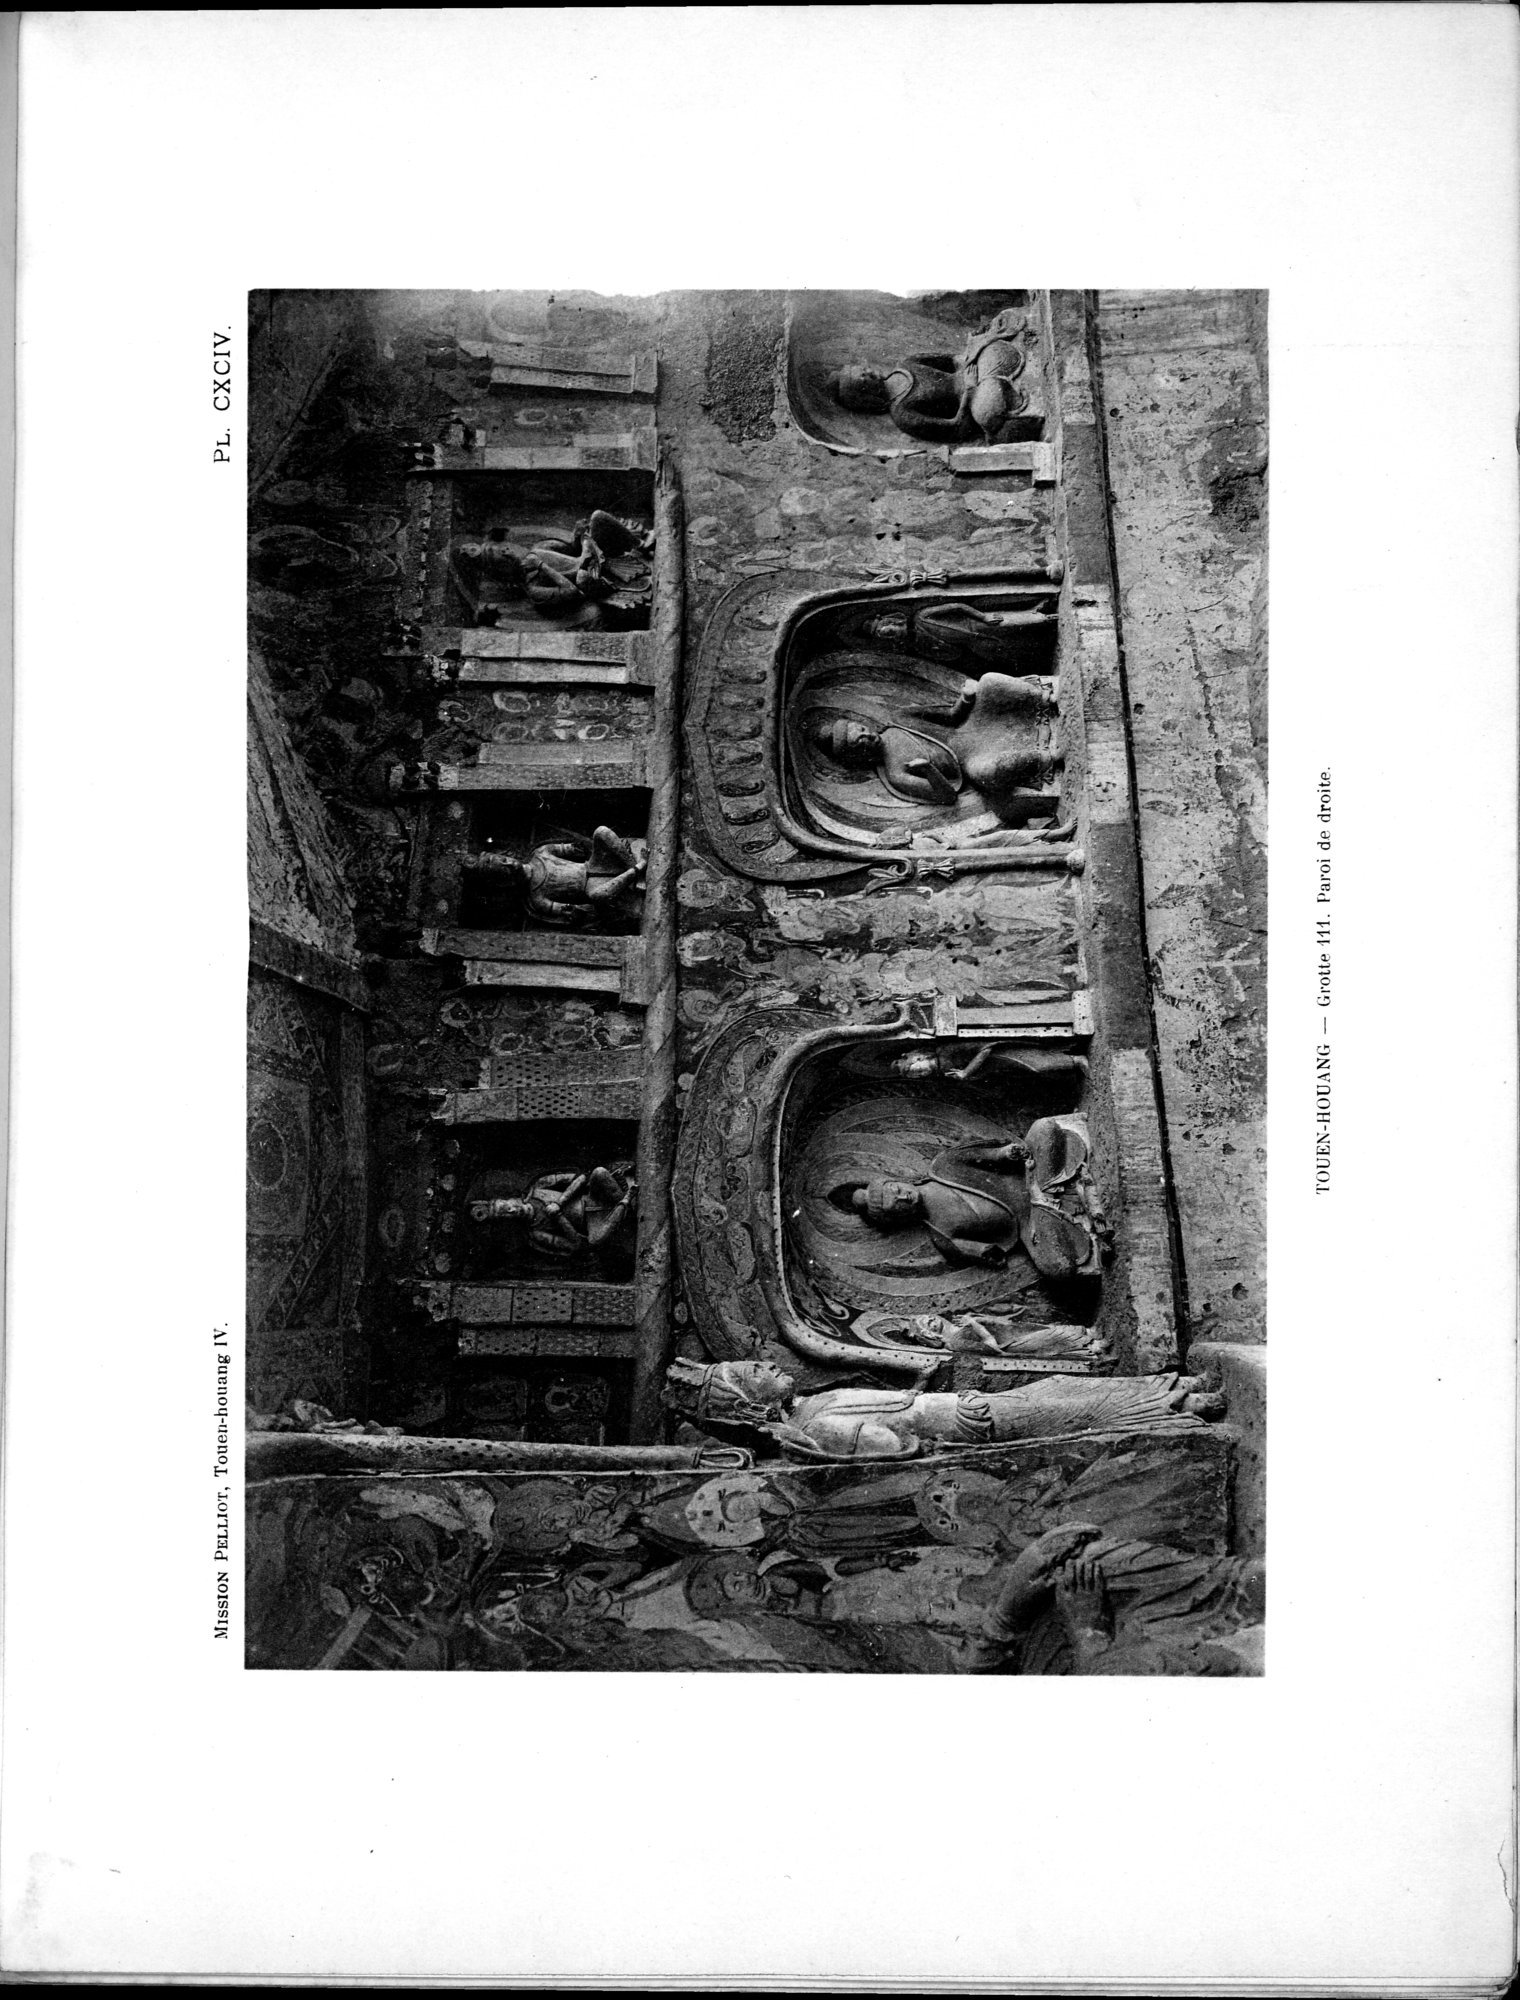 Les grottes de Touen-Houang : vol.4 / Page 13 (Grayscale High Resolution Image)